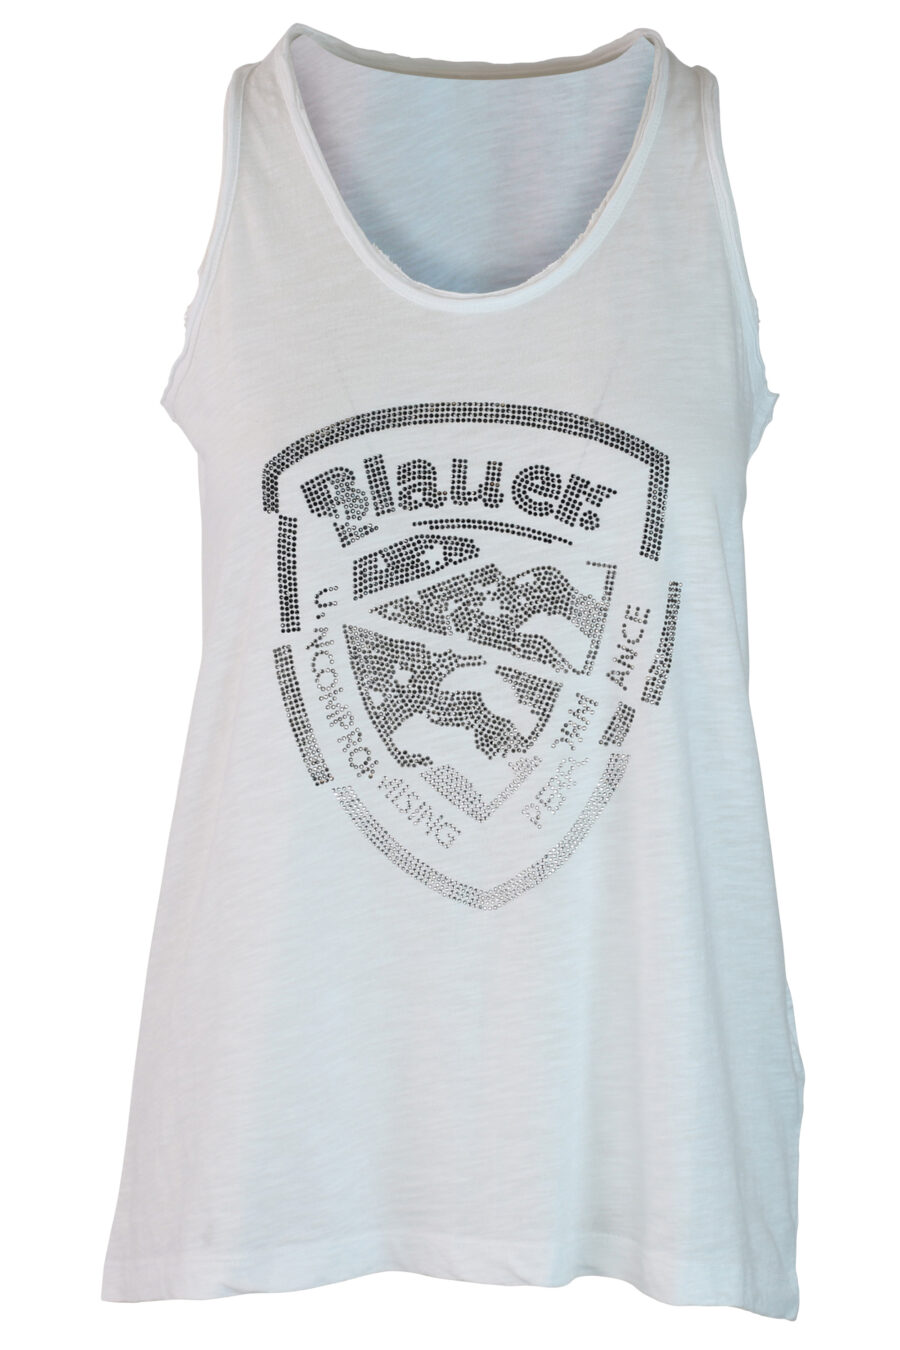 White sleeveless T-shirt with silver maxilogue - IMG 0372